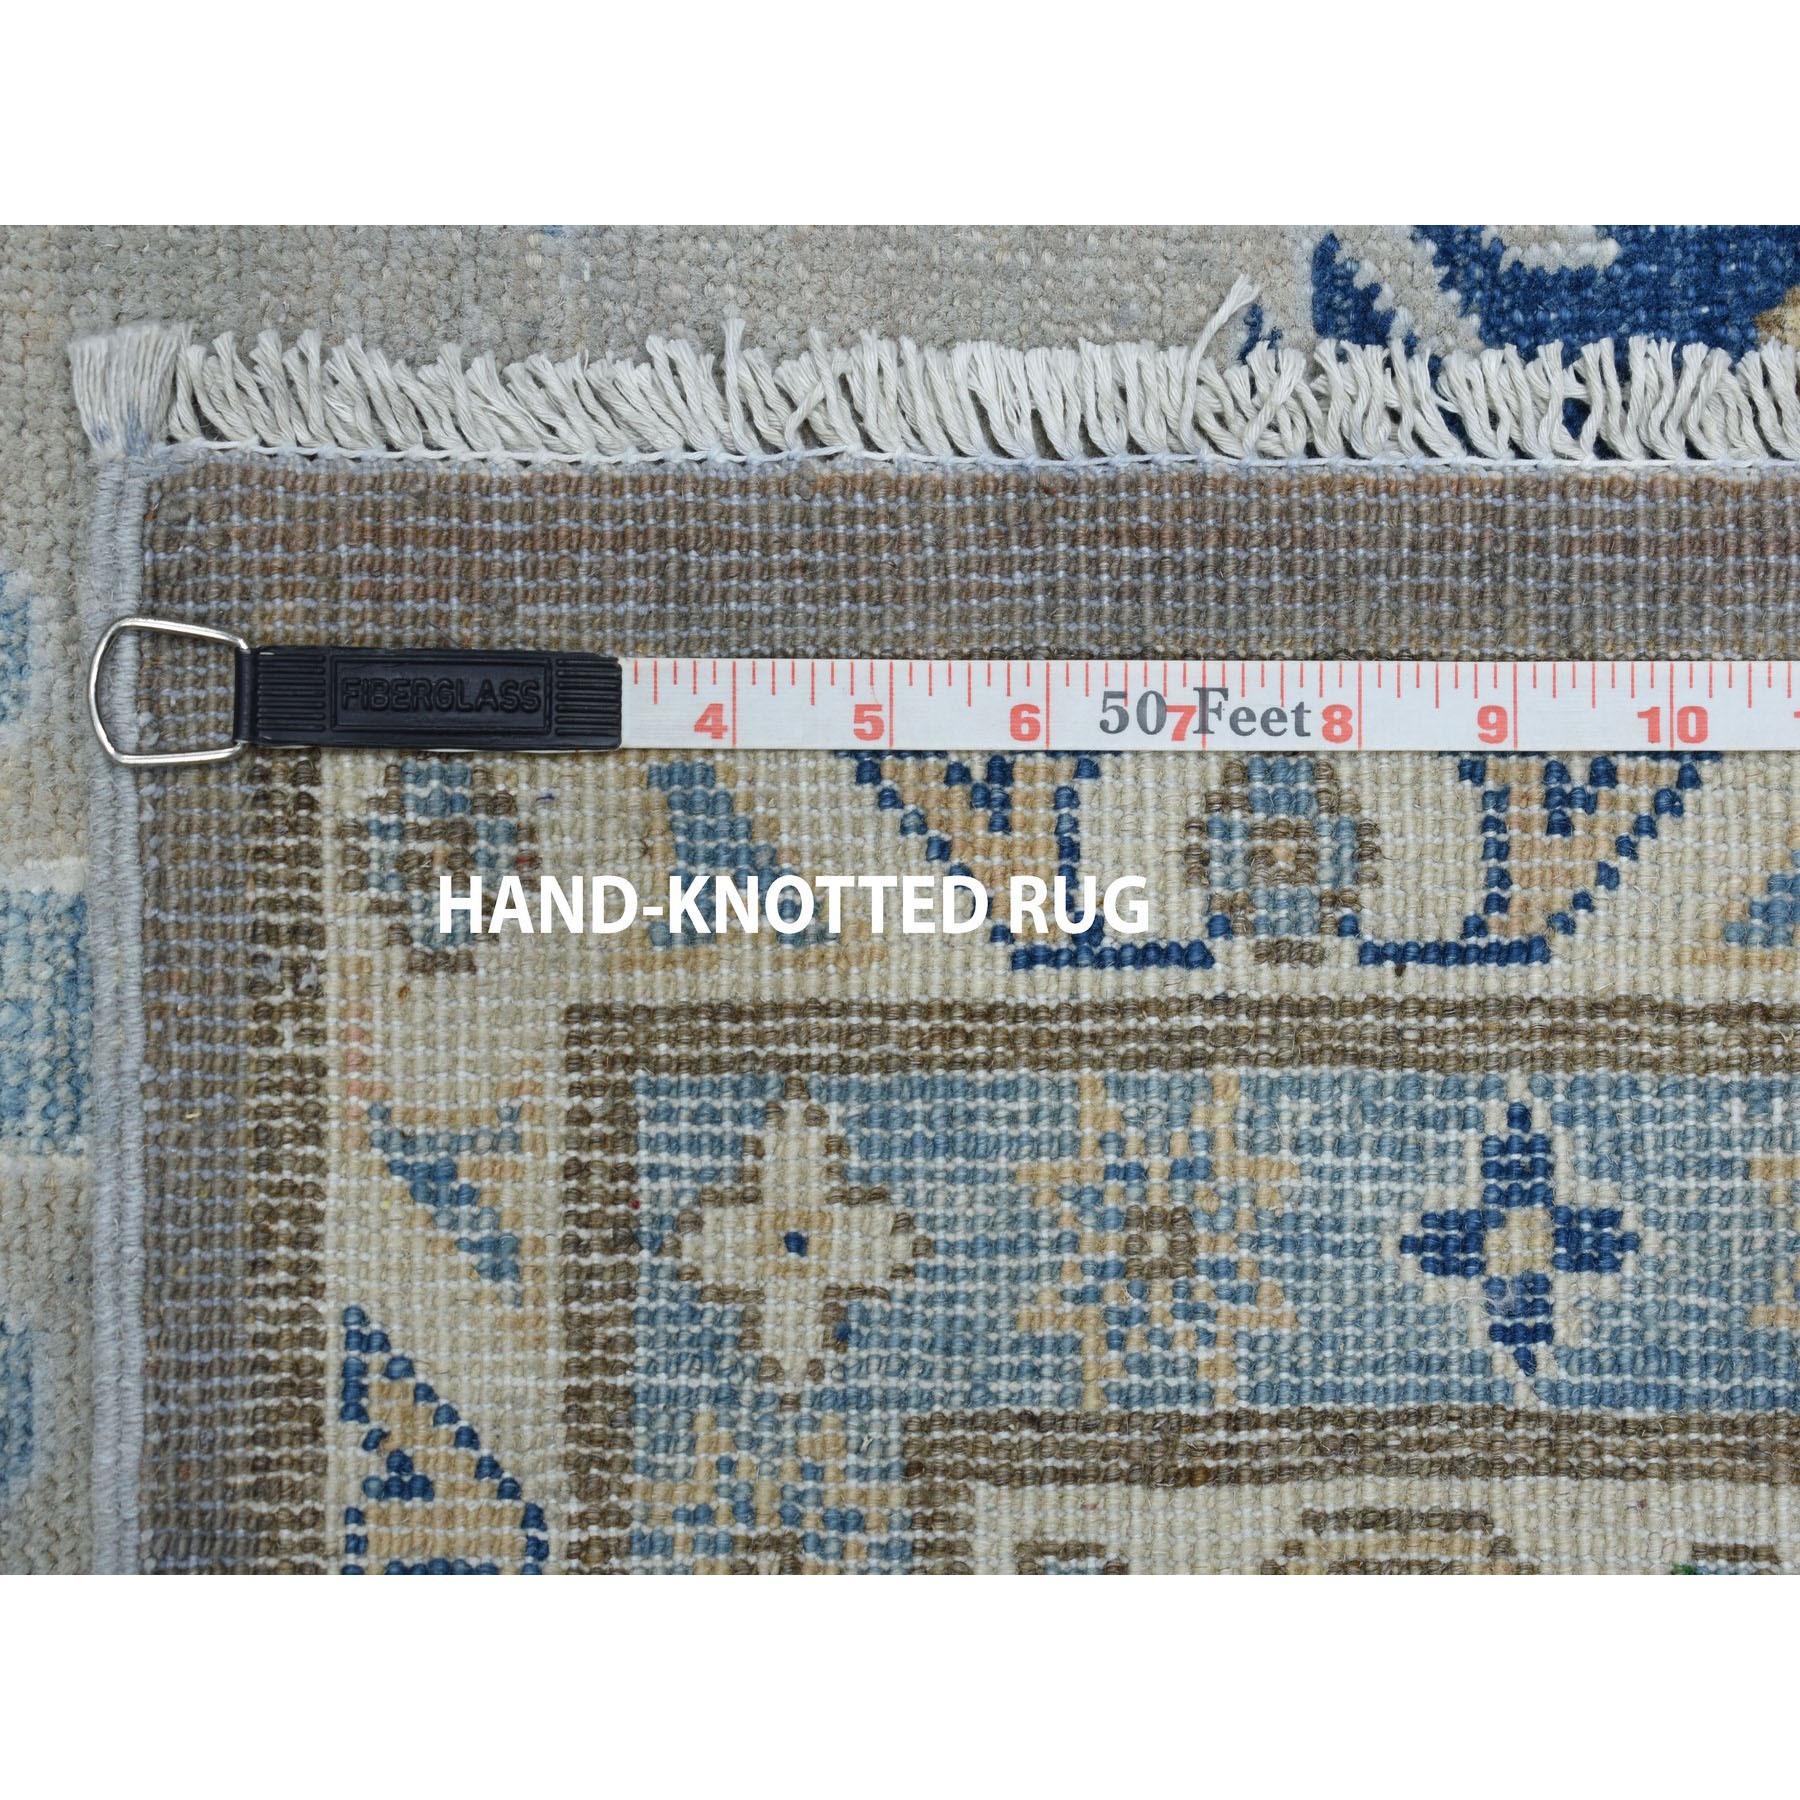 7-10 x10- Gray Vintage Look Kazak Geometric Design Hand-Knotted Oriental Rug 